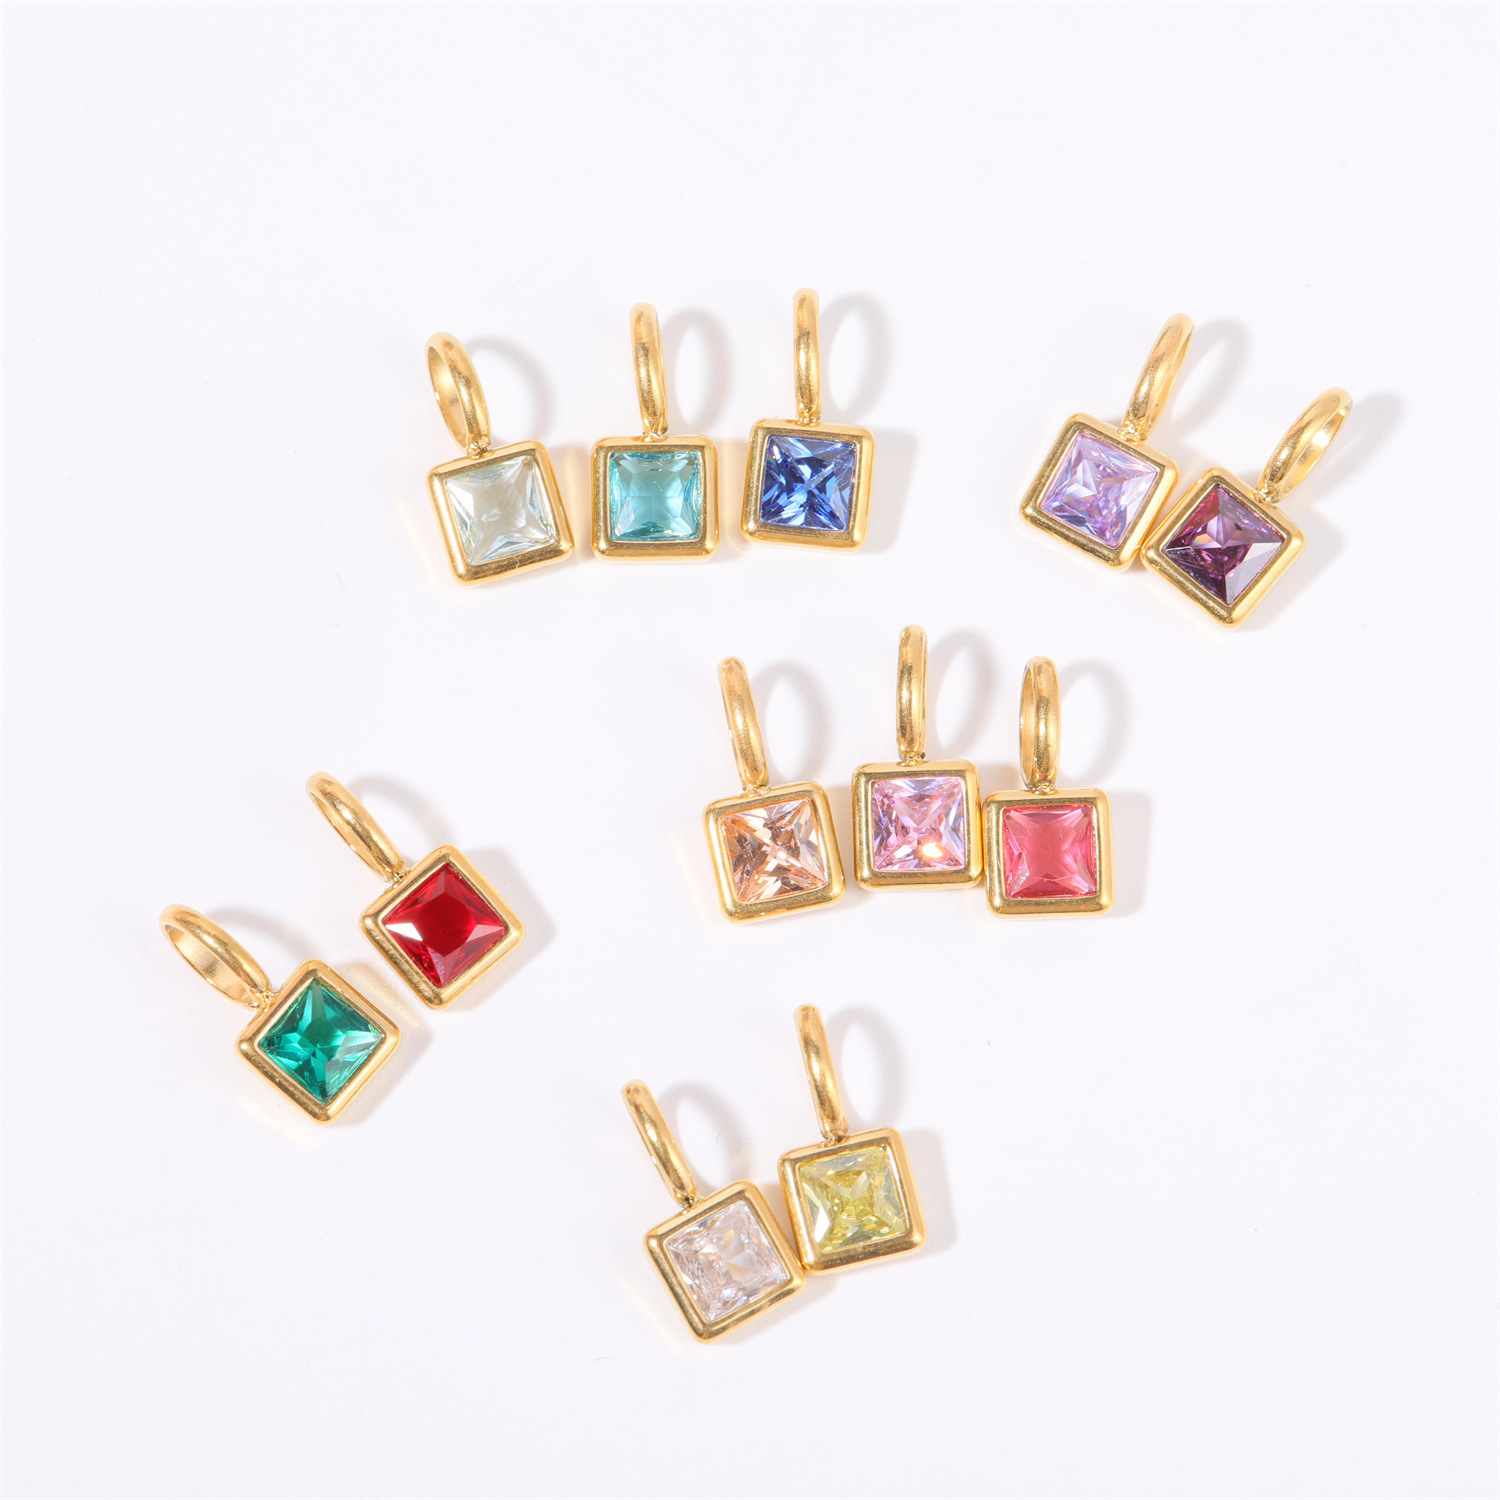 Colorful birthstone pendant jewelry DIY accessories